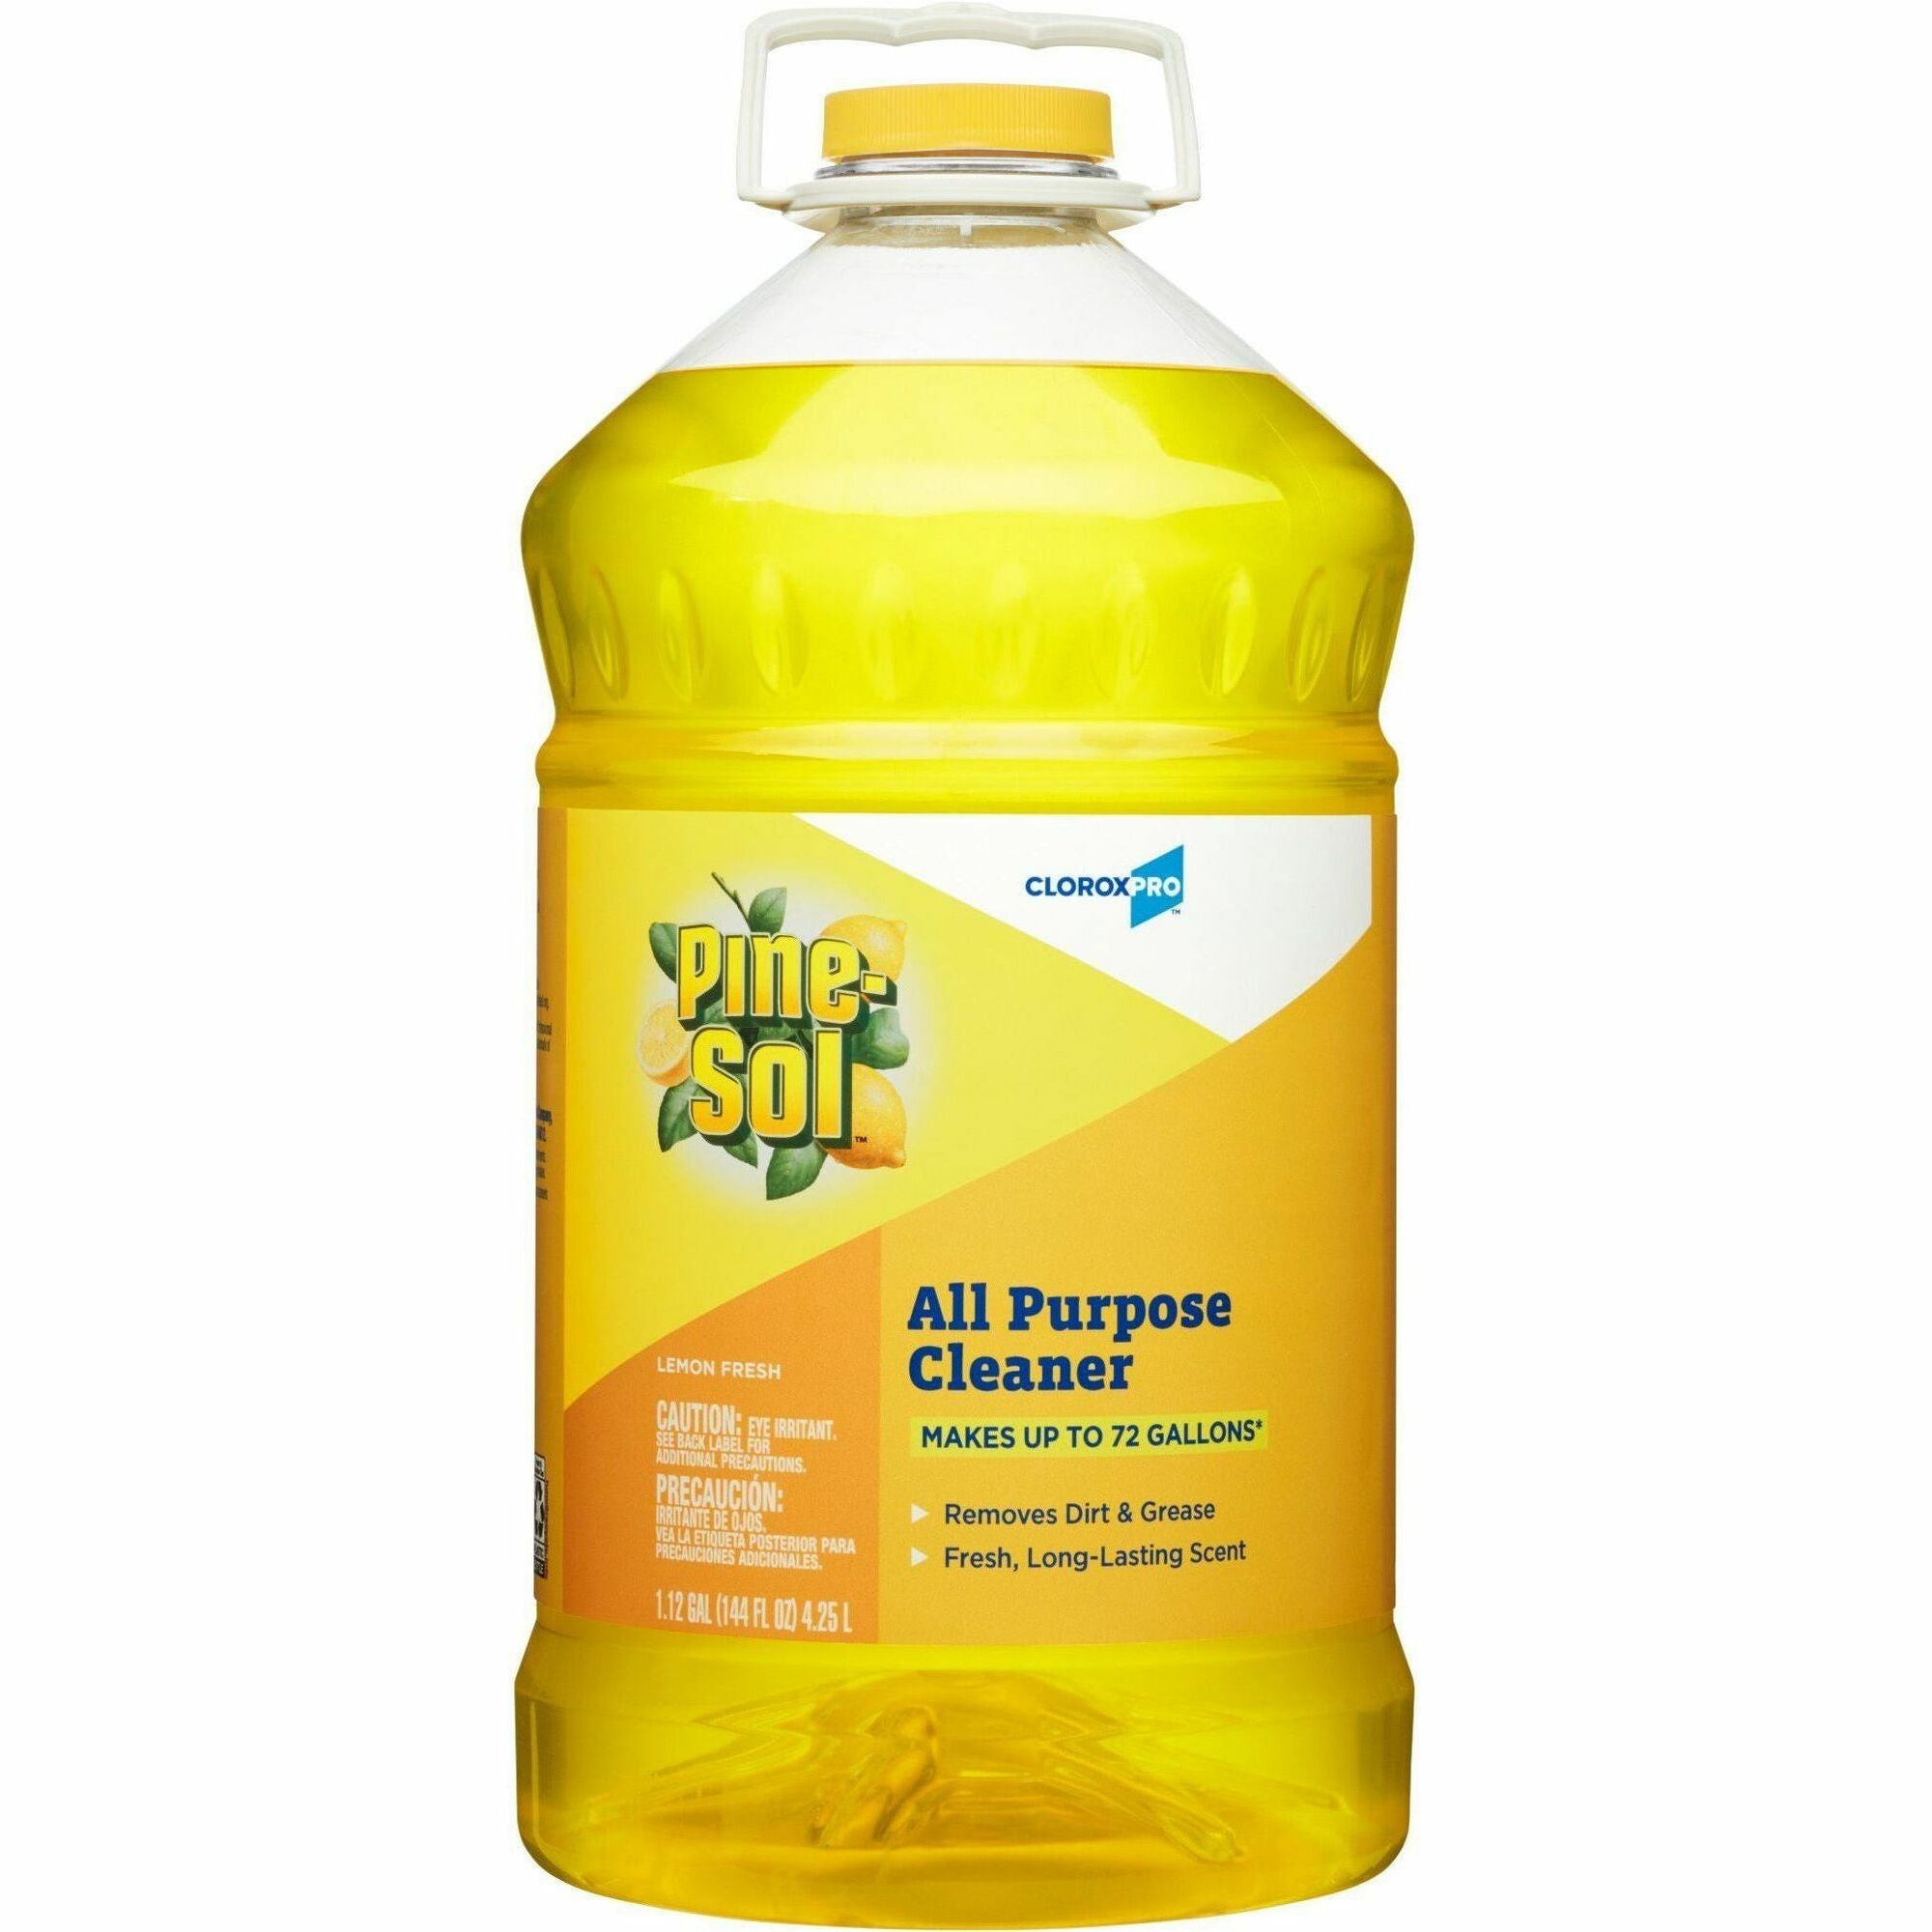 CloroxPro Pine-Sol All Purpose Cleaner - Concentrate - 144 fl oz (4.5 quart) - Lemon Fresh Scent - 63 / Bundle - Residue-free, Deodorize, Antibacterial - Yellow - 1